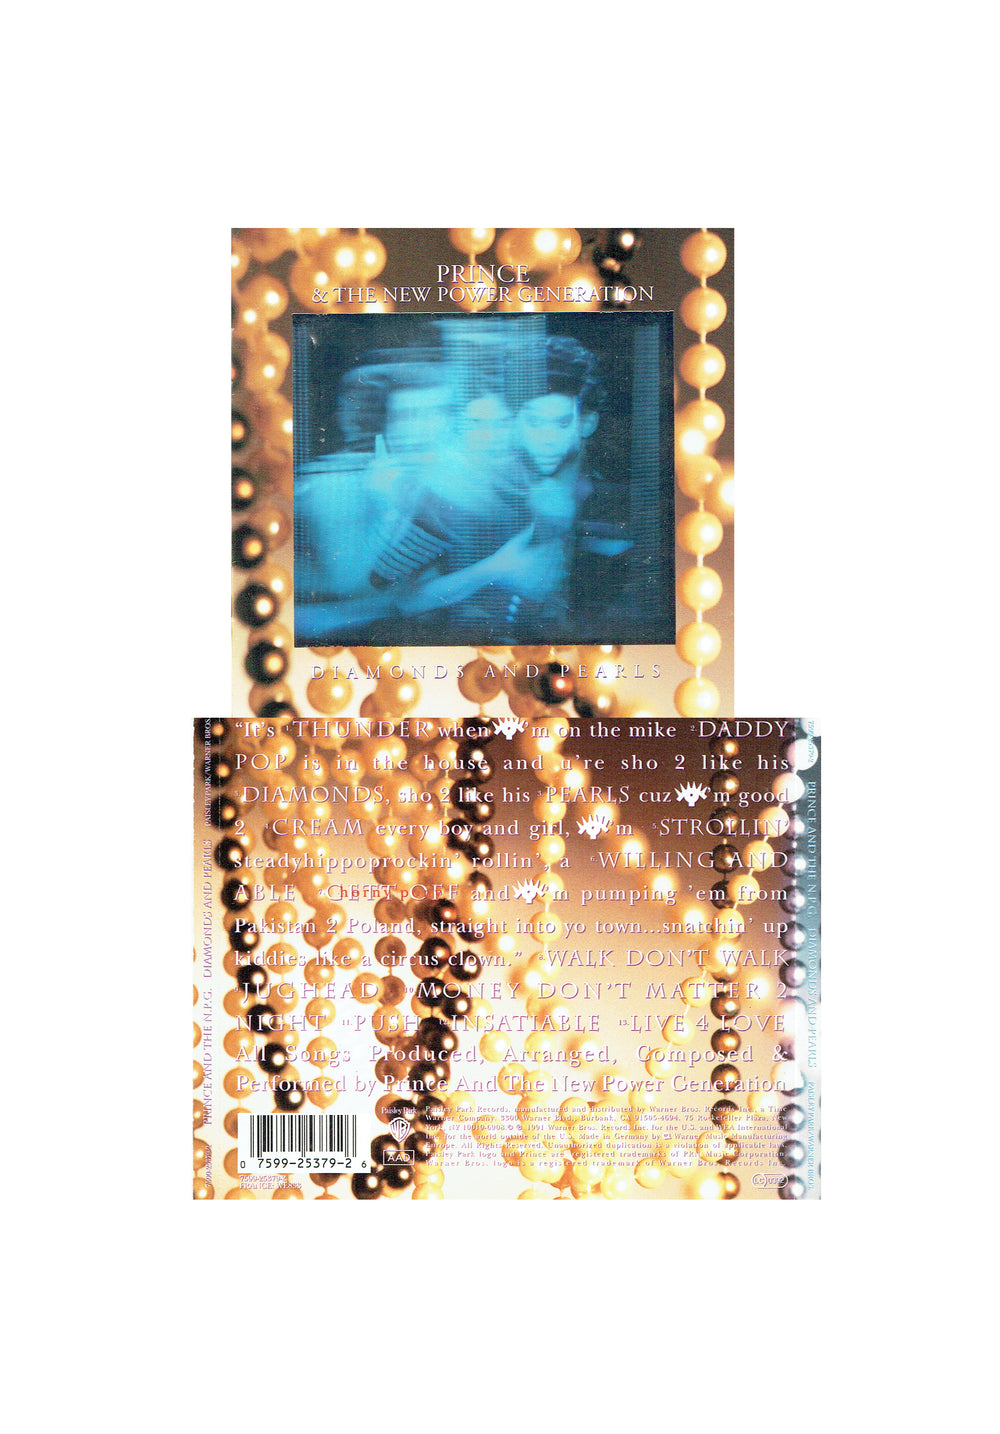 Prince – & The New Power Generation - Diamonds & Pearls Holographic Sleeve CD Album 1991 Original